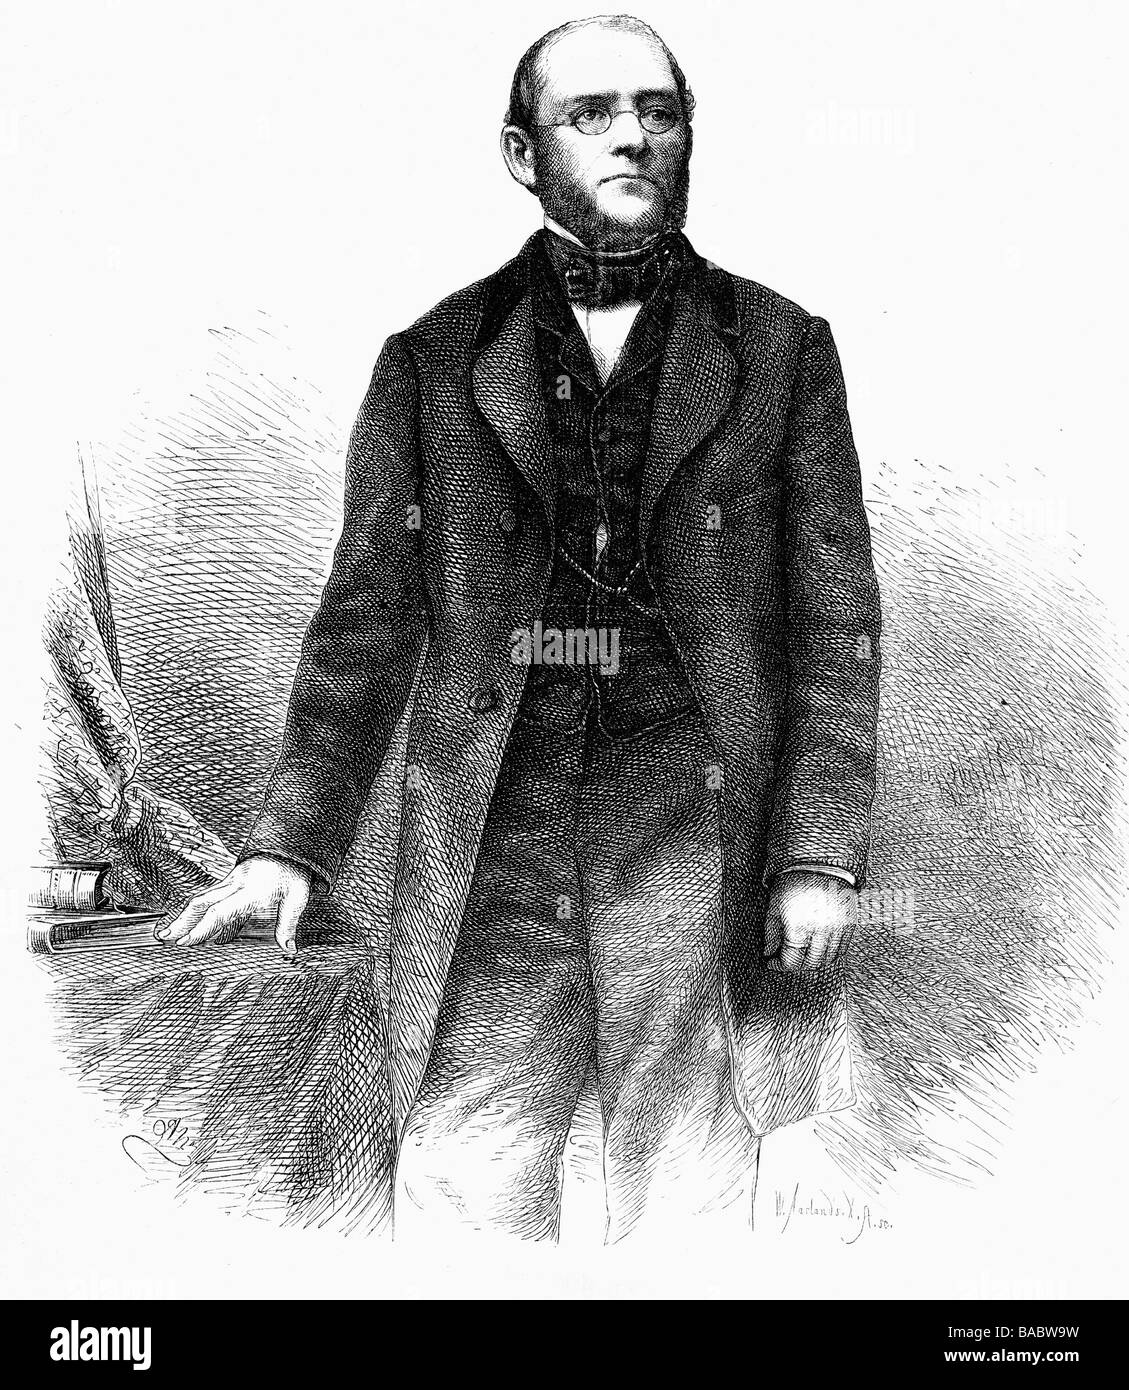 Rokitansky, Carl Baron von, 19.2.1804 - 23.7.1878, Bohemian physician, half length, wood engraving, after drawing by Adolf Neumann (1825 - 1884), Stock Photo